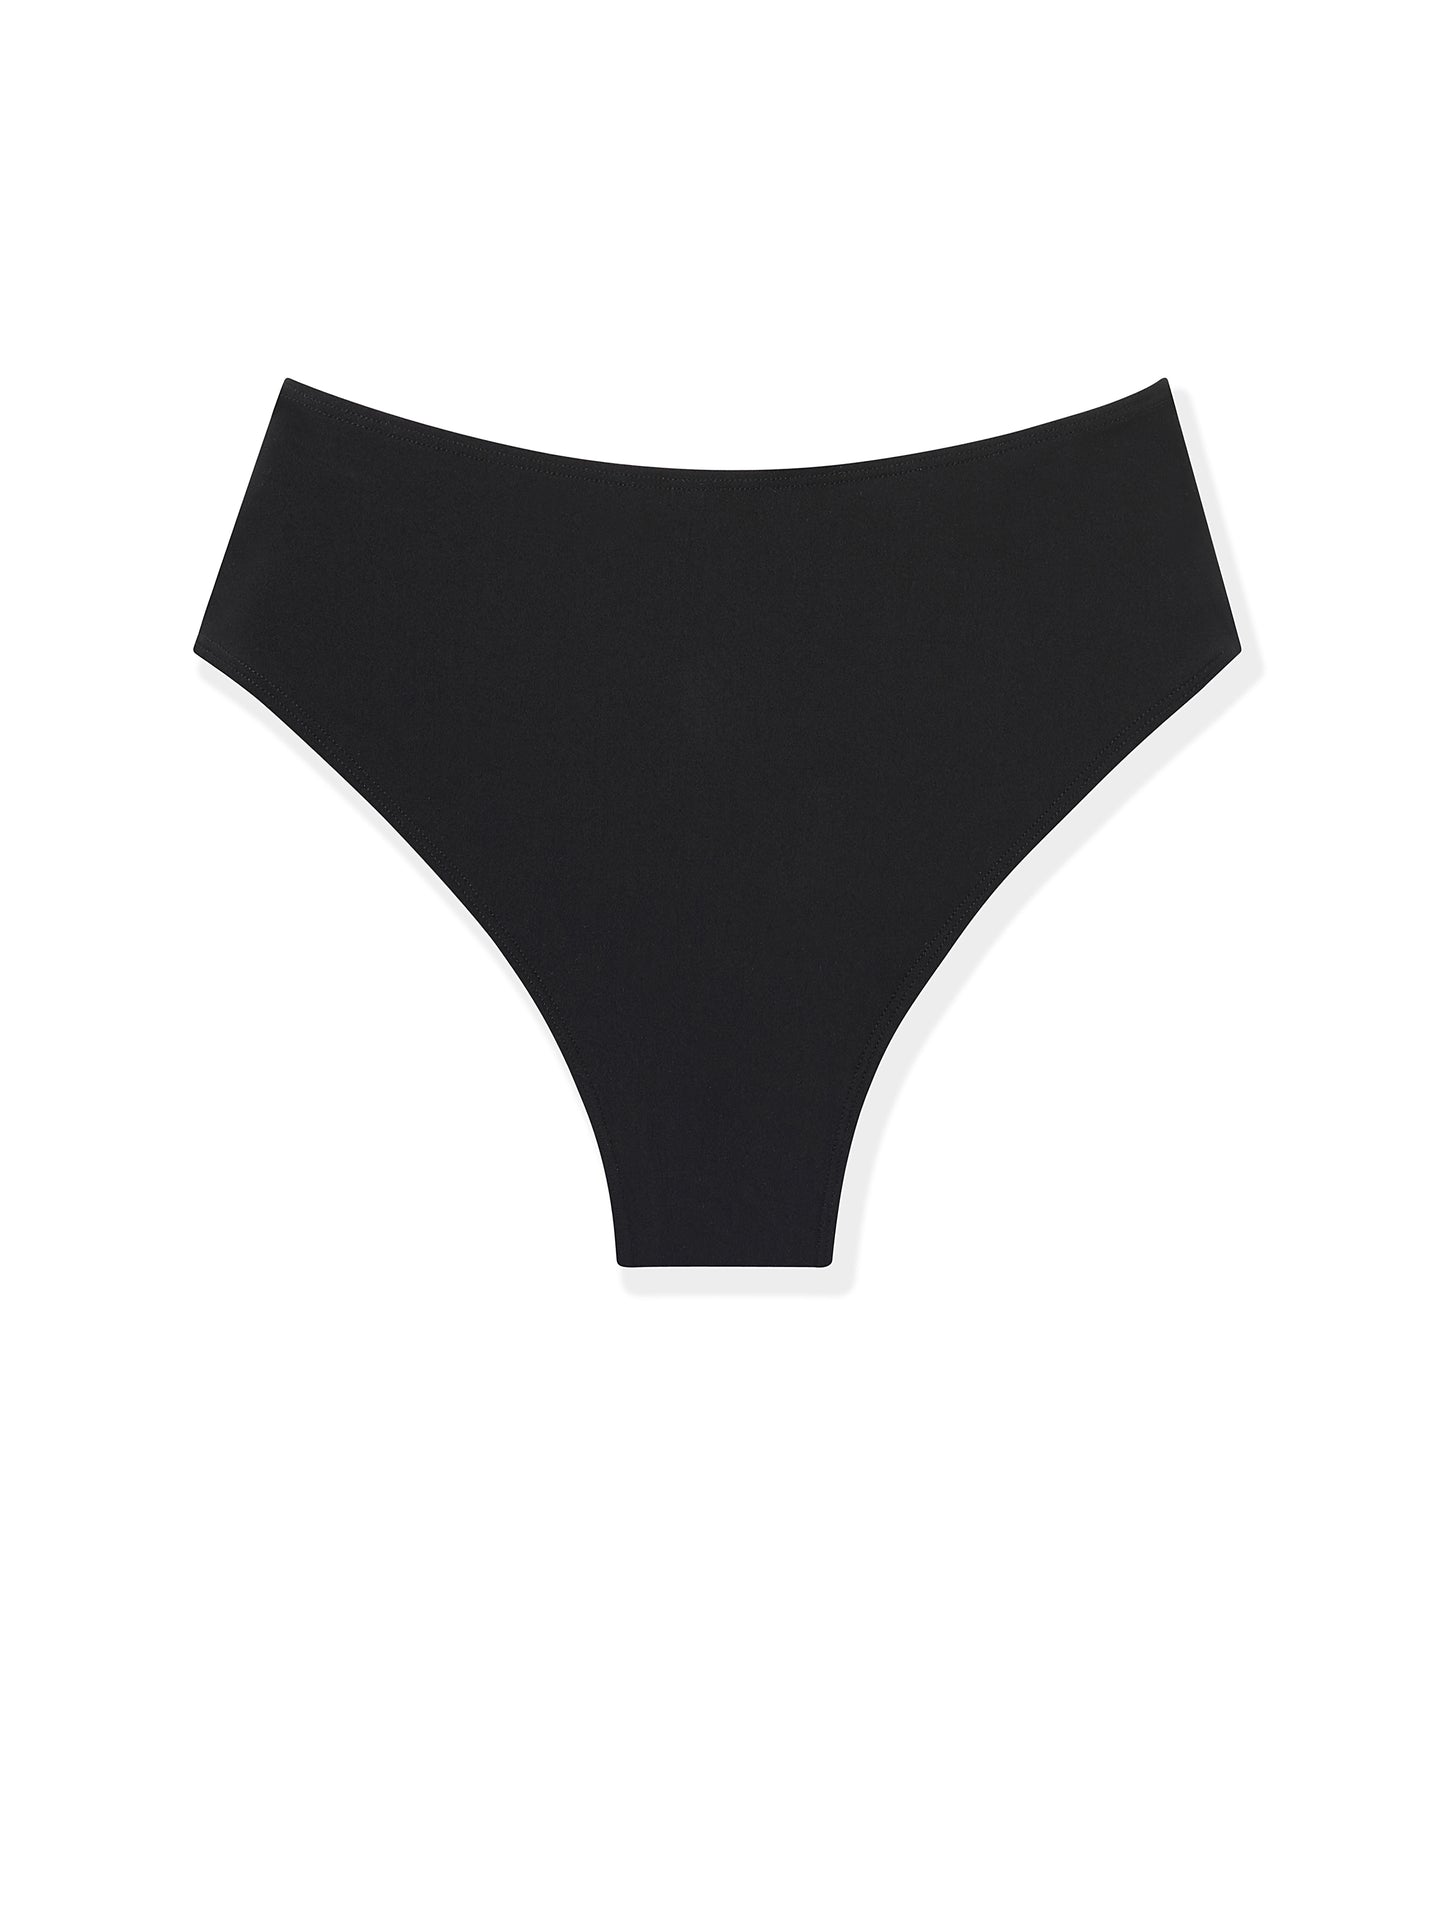 UnderWear? Luxury Collection Black Bikini Bottom Shapewear Size 1X